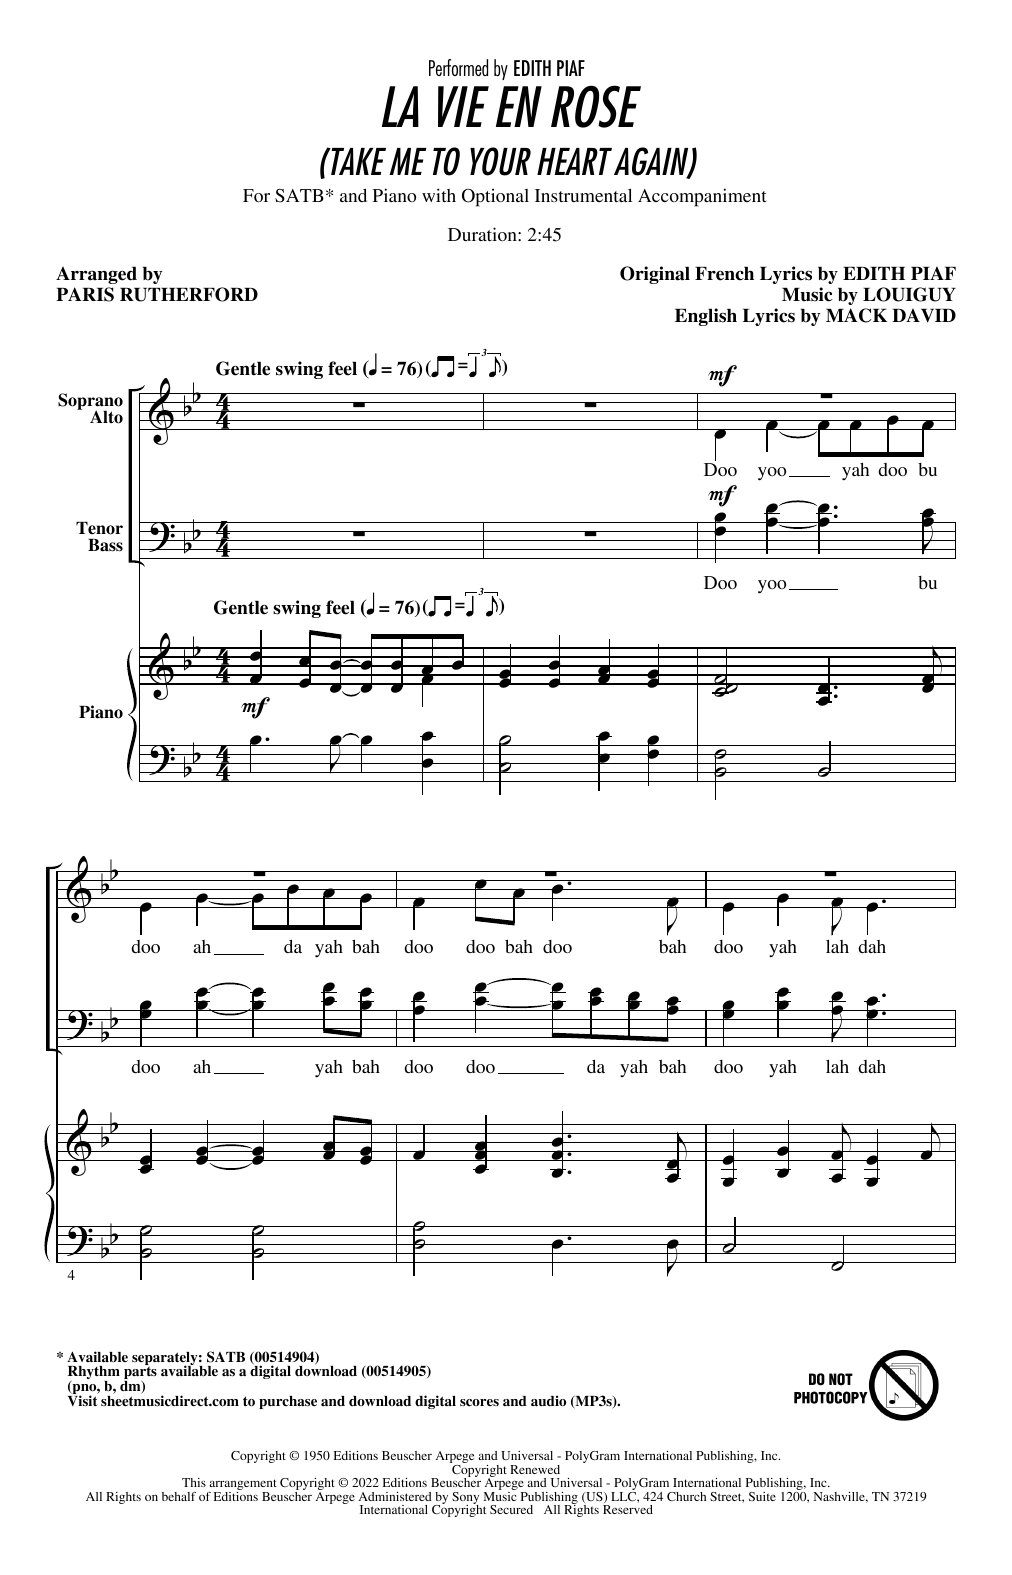 Édith Piaf La Vie En Rose (Take Me To Your Heart Again) (arr. Paris Rutherford) Sheet Music Notes & Chords for SATB Choir - Download or Print PDF